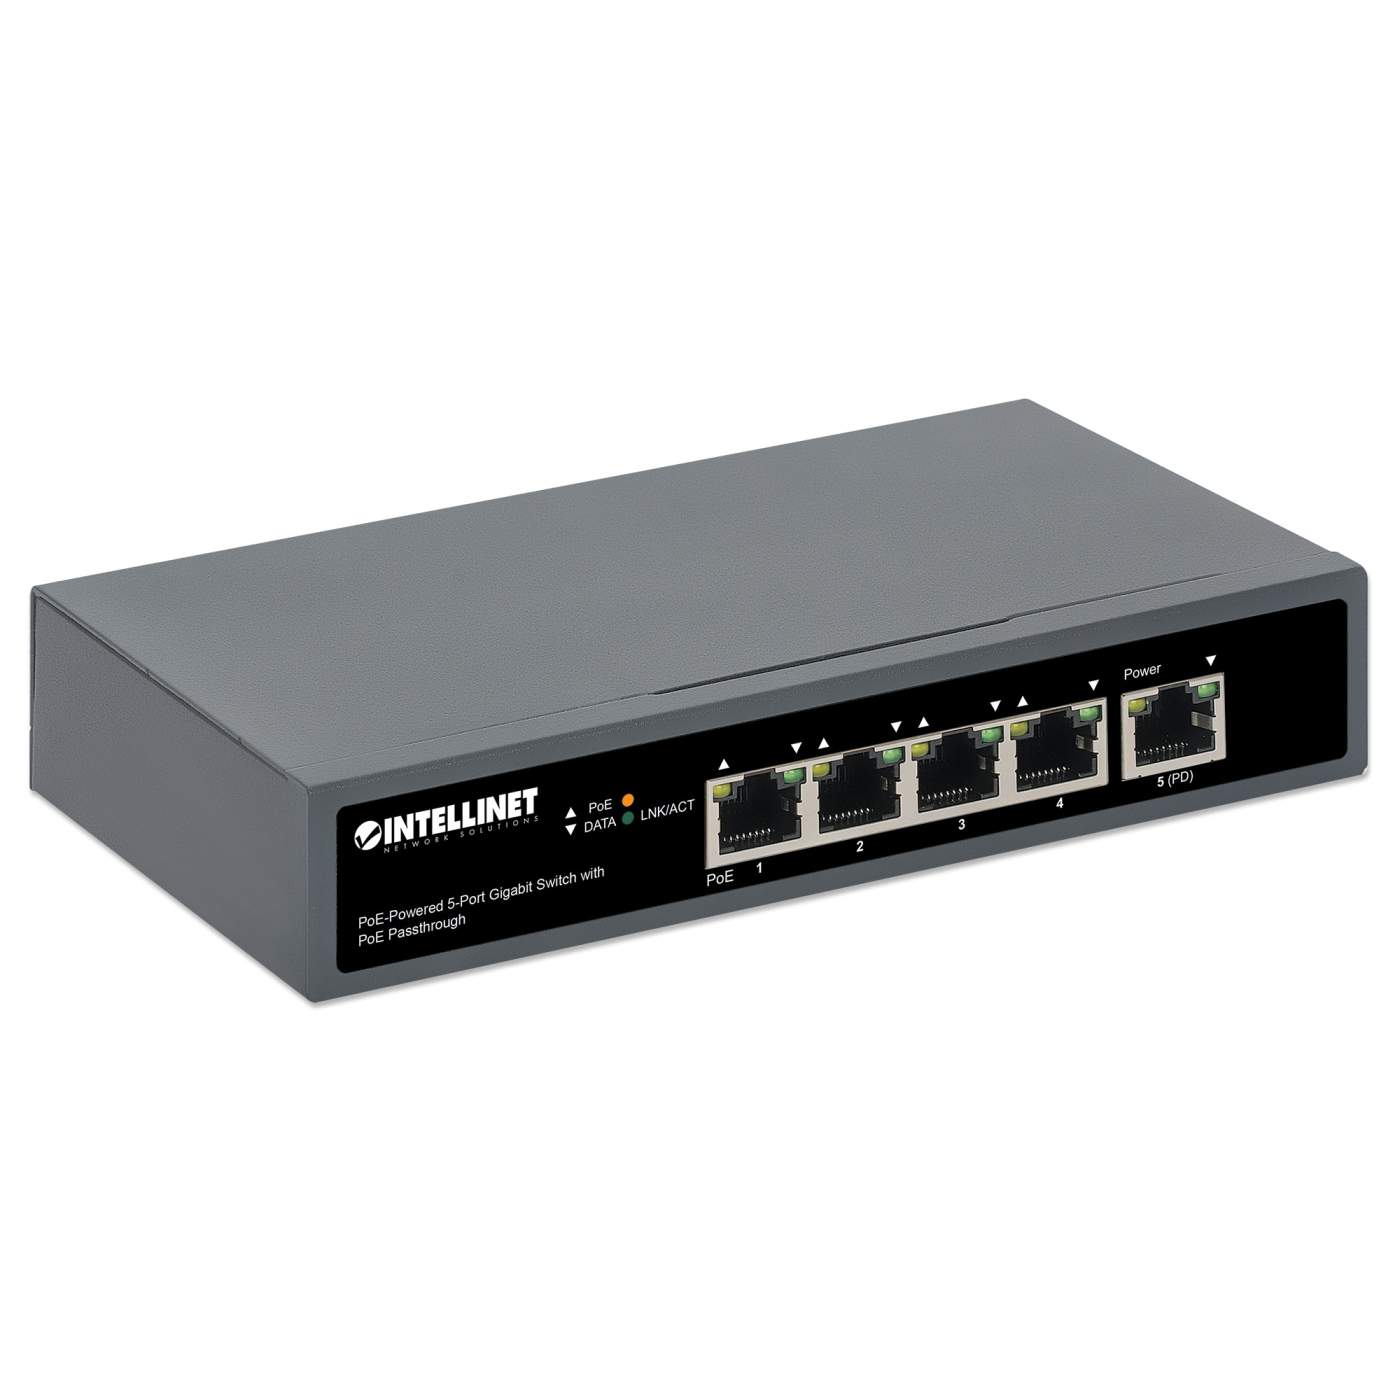 Intellinet 5-Port Gigabit Ethernet PoE+ Switch (561839